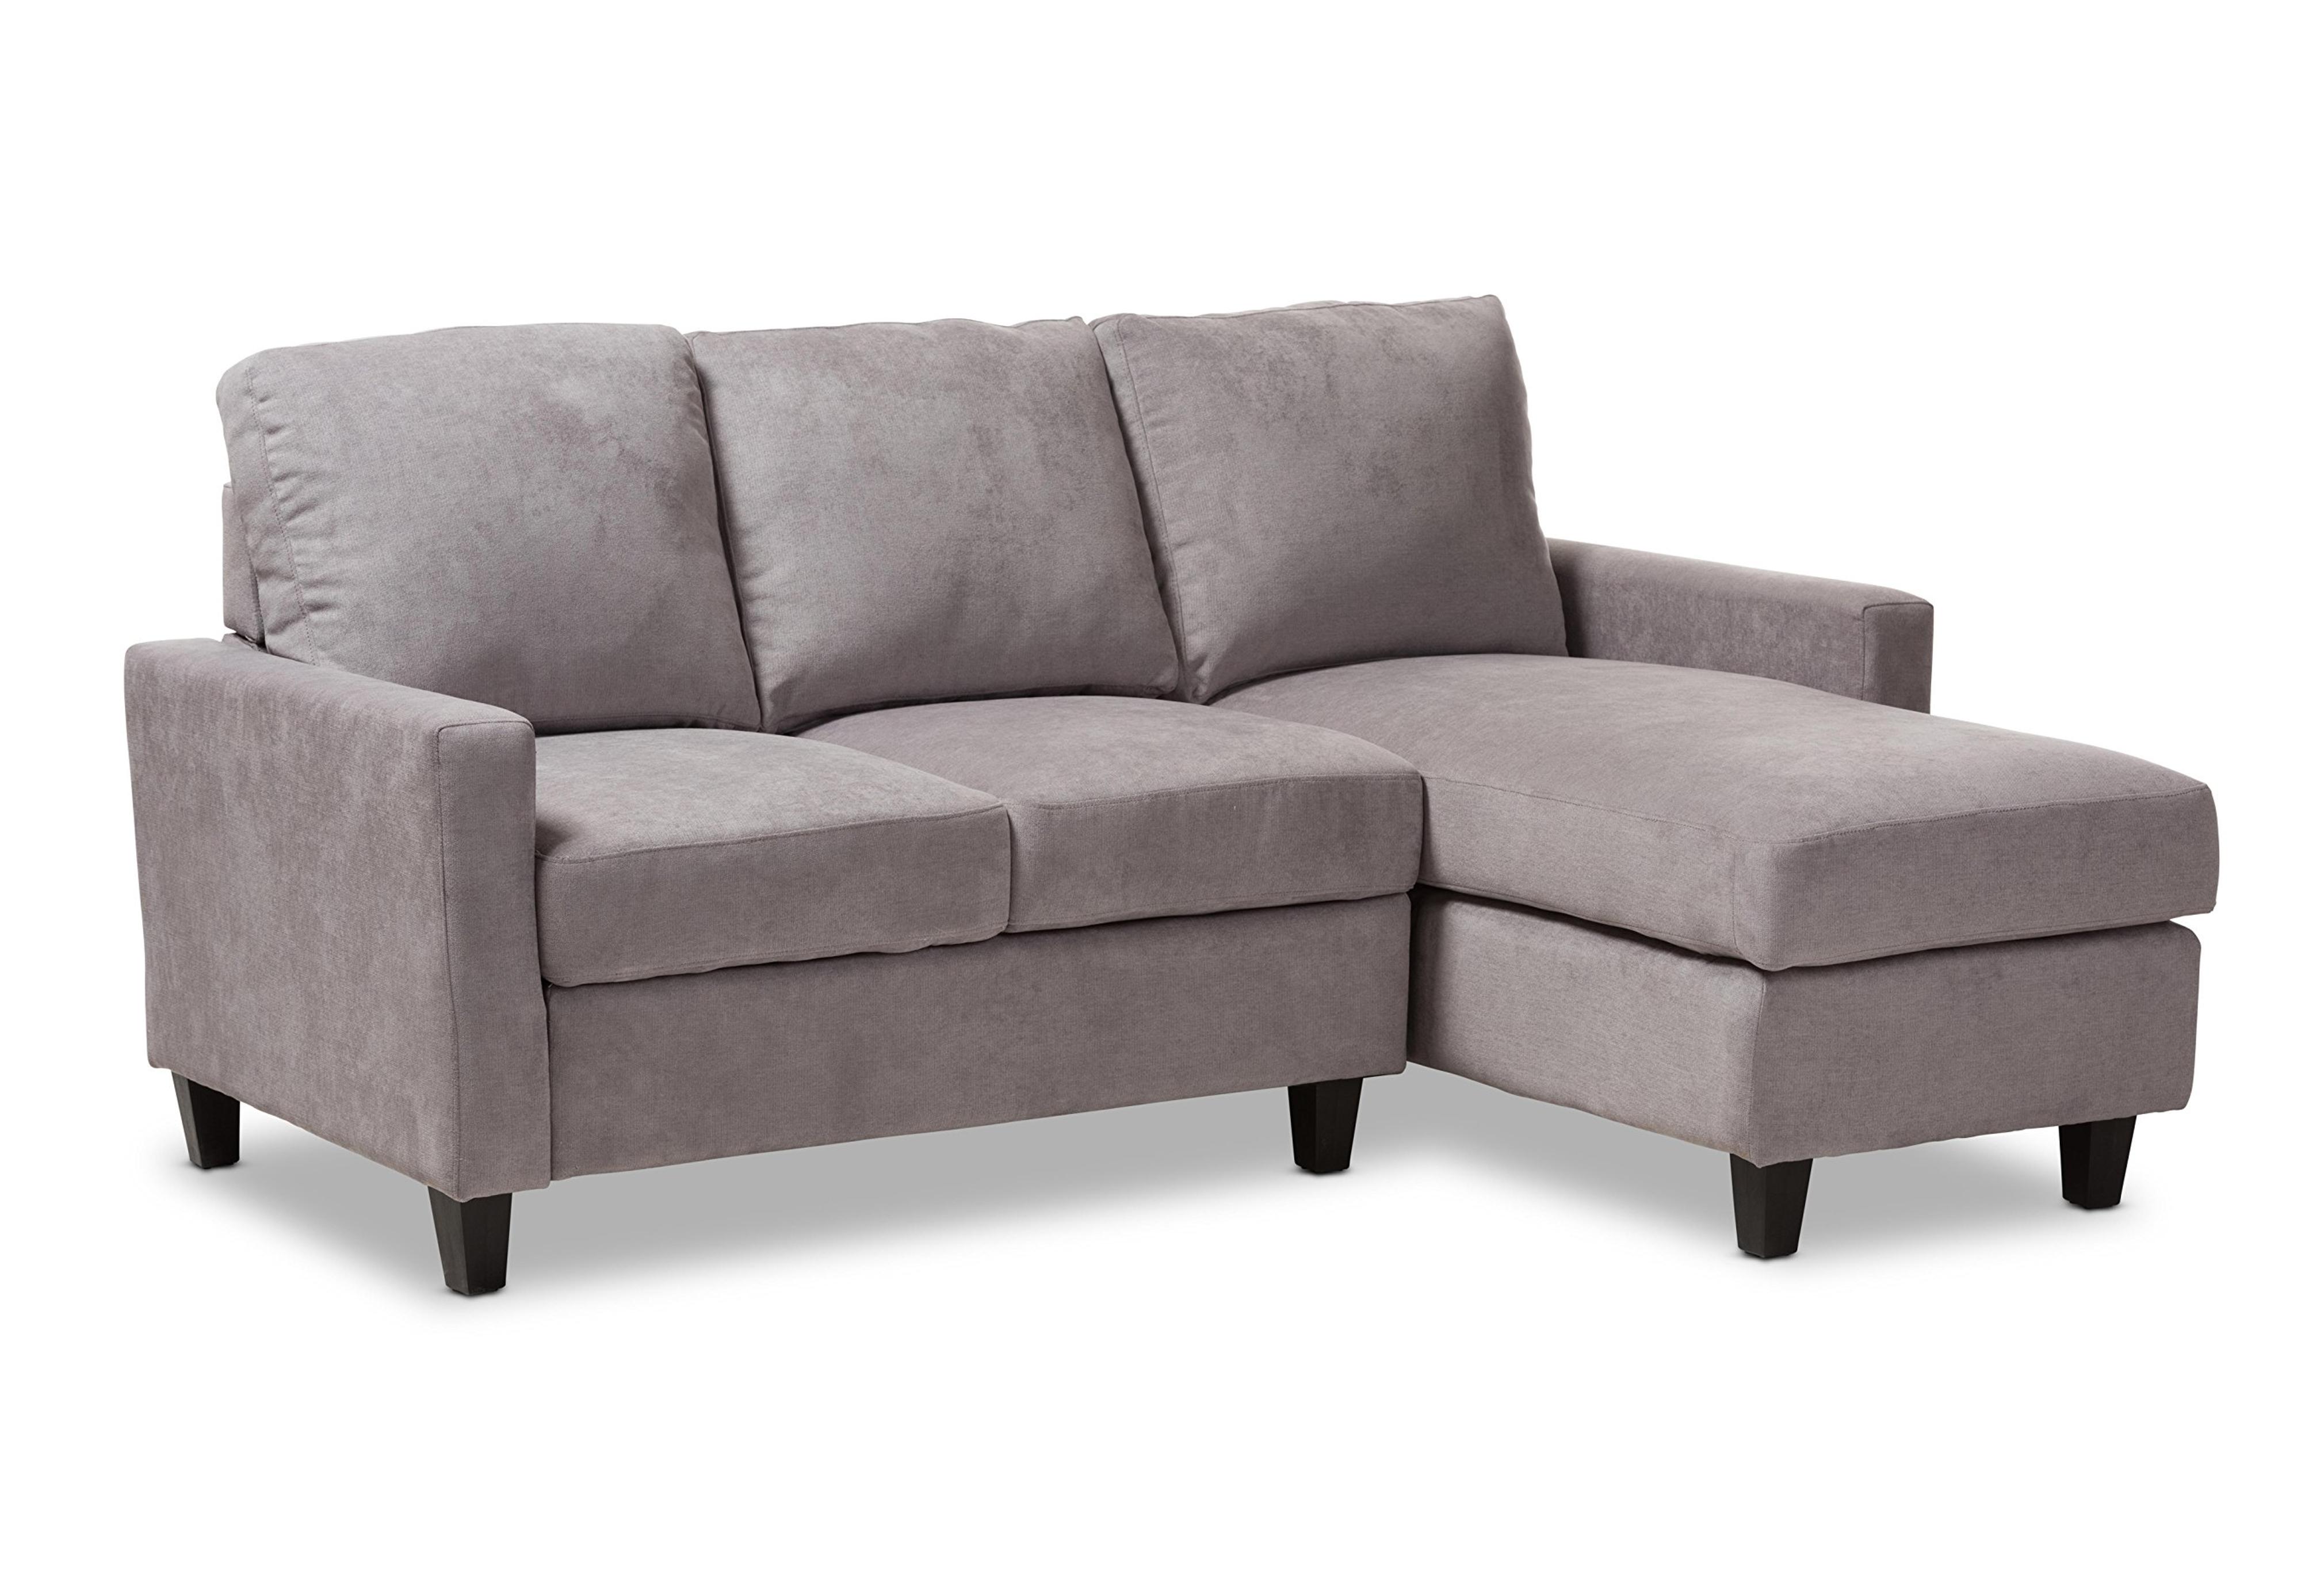 Amazon.com: Baxton Studio Greyson Sectional Sofa, Light Grey : Home & Kitchen